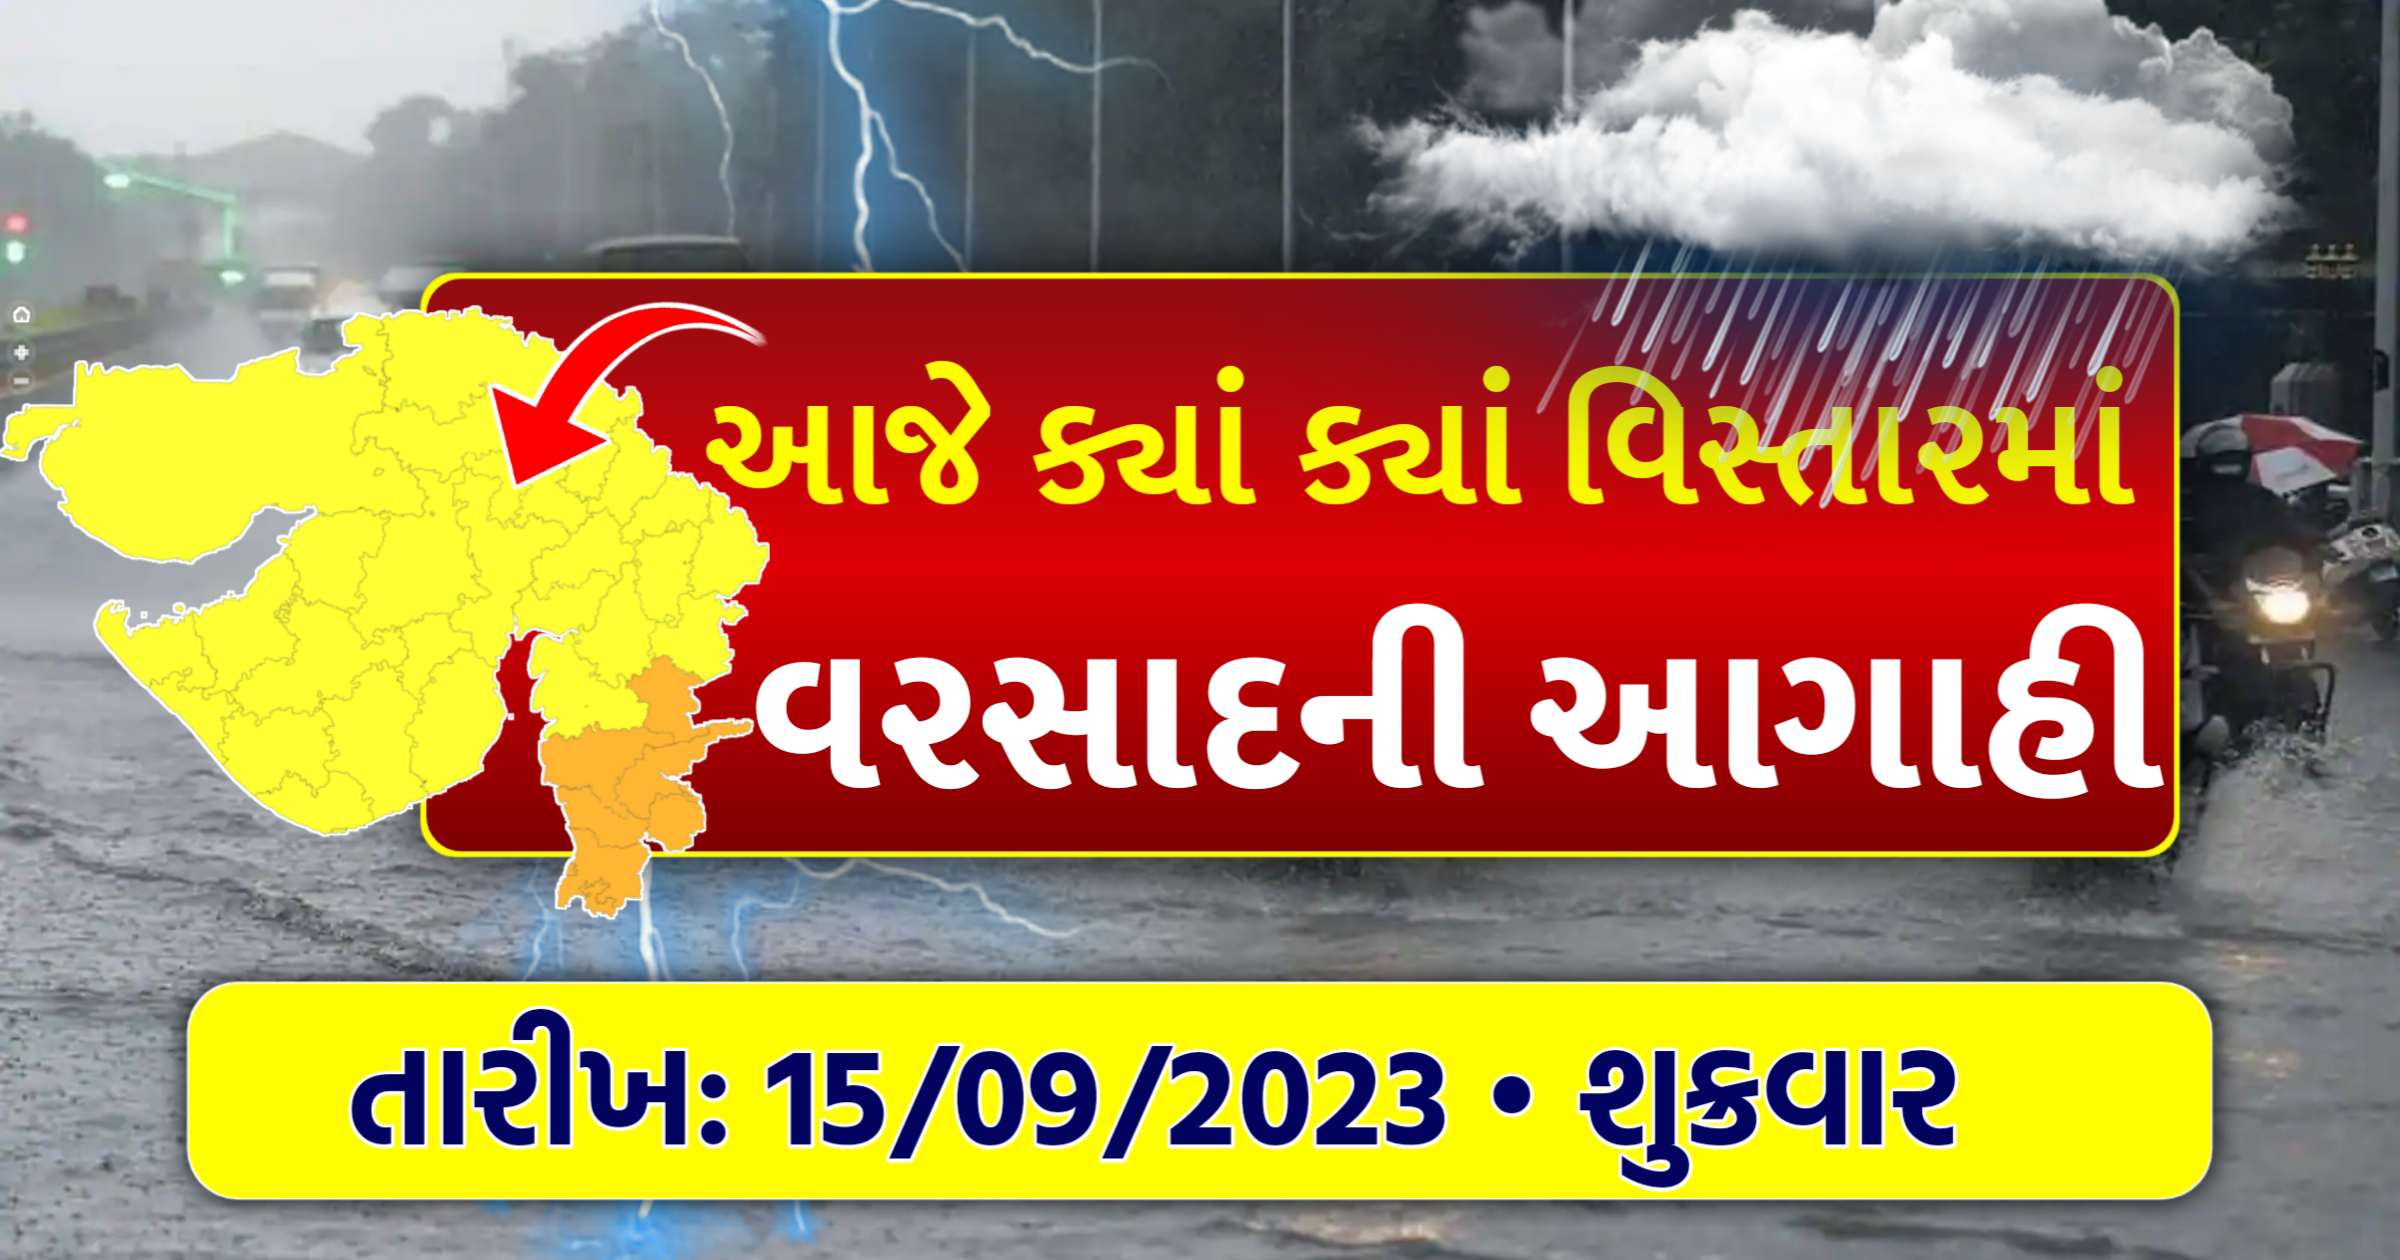 Gujarat Weather Forecast • આજે ક્યાં ક્યાં વિસ્તારમાં વરસાદની આગાહી, જાણો આજના વરસાદની આગાહી